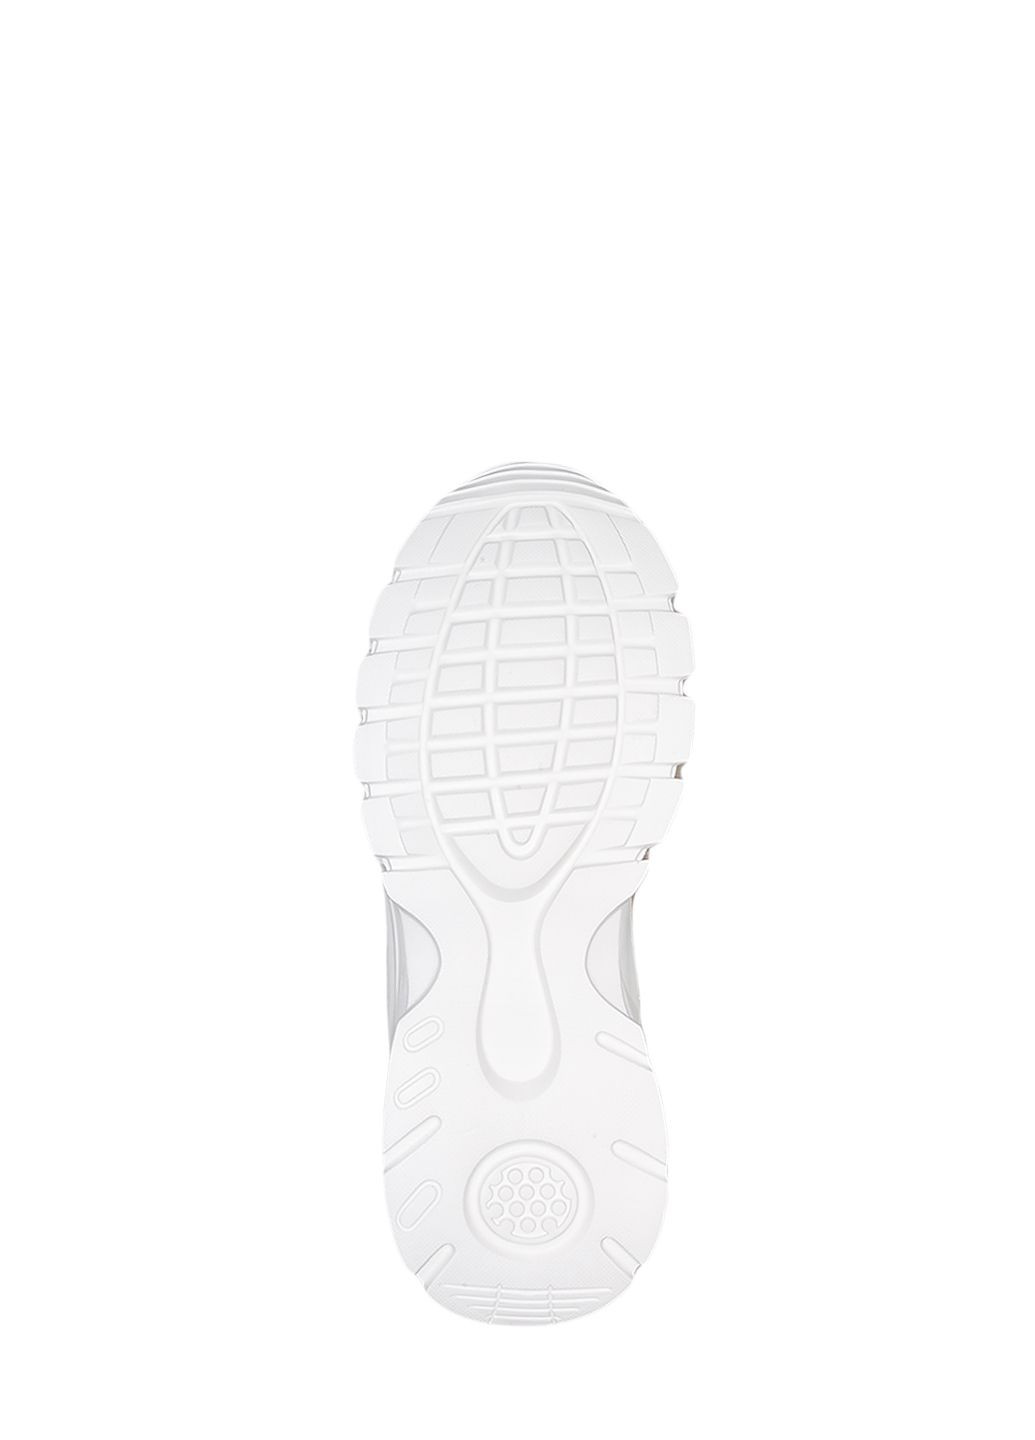 Білі осінні кросівки st2600-8 white Stilli